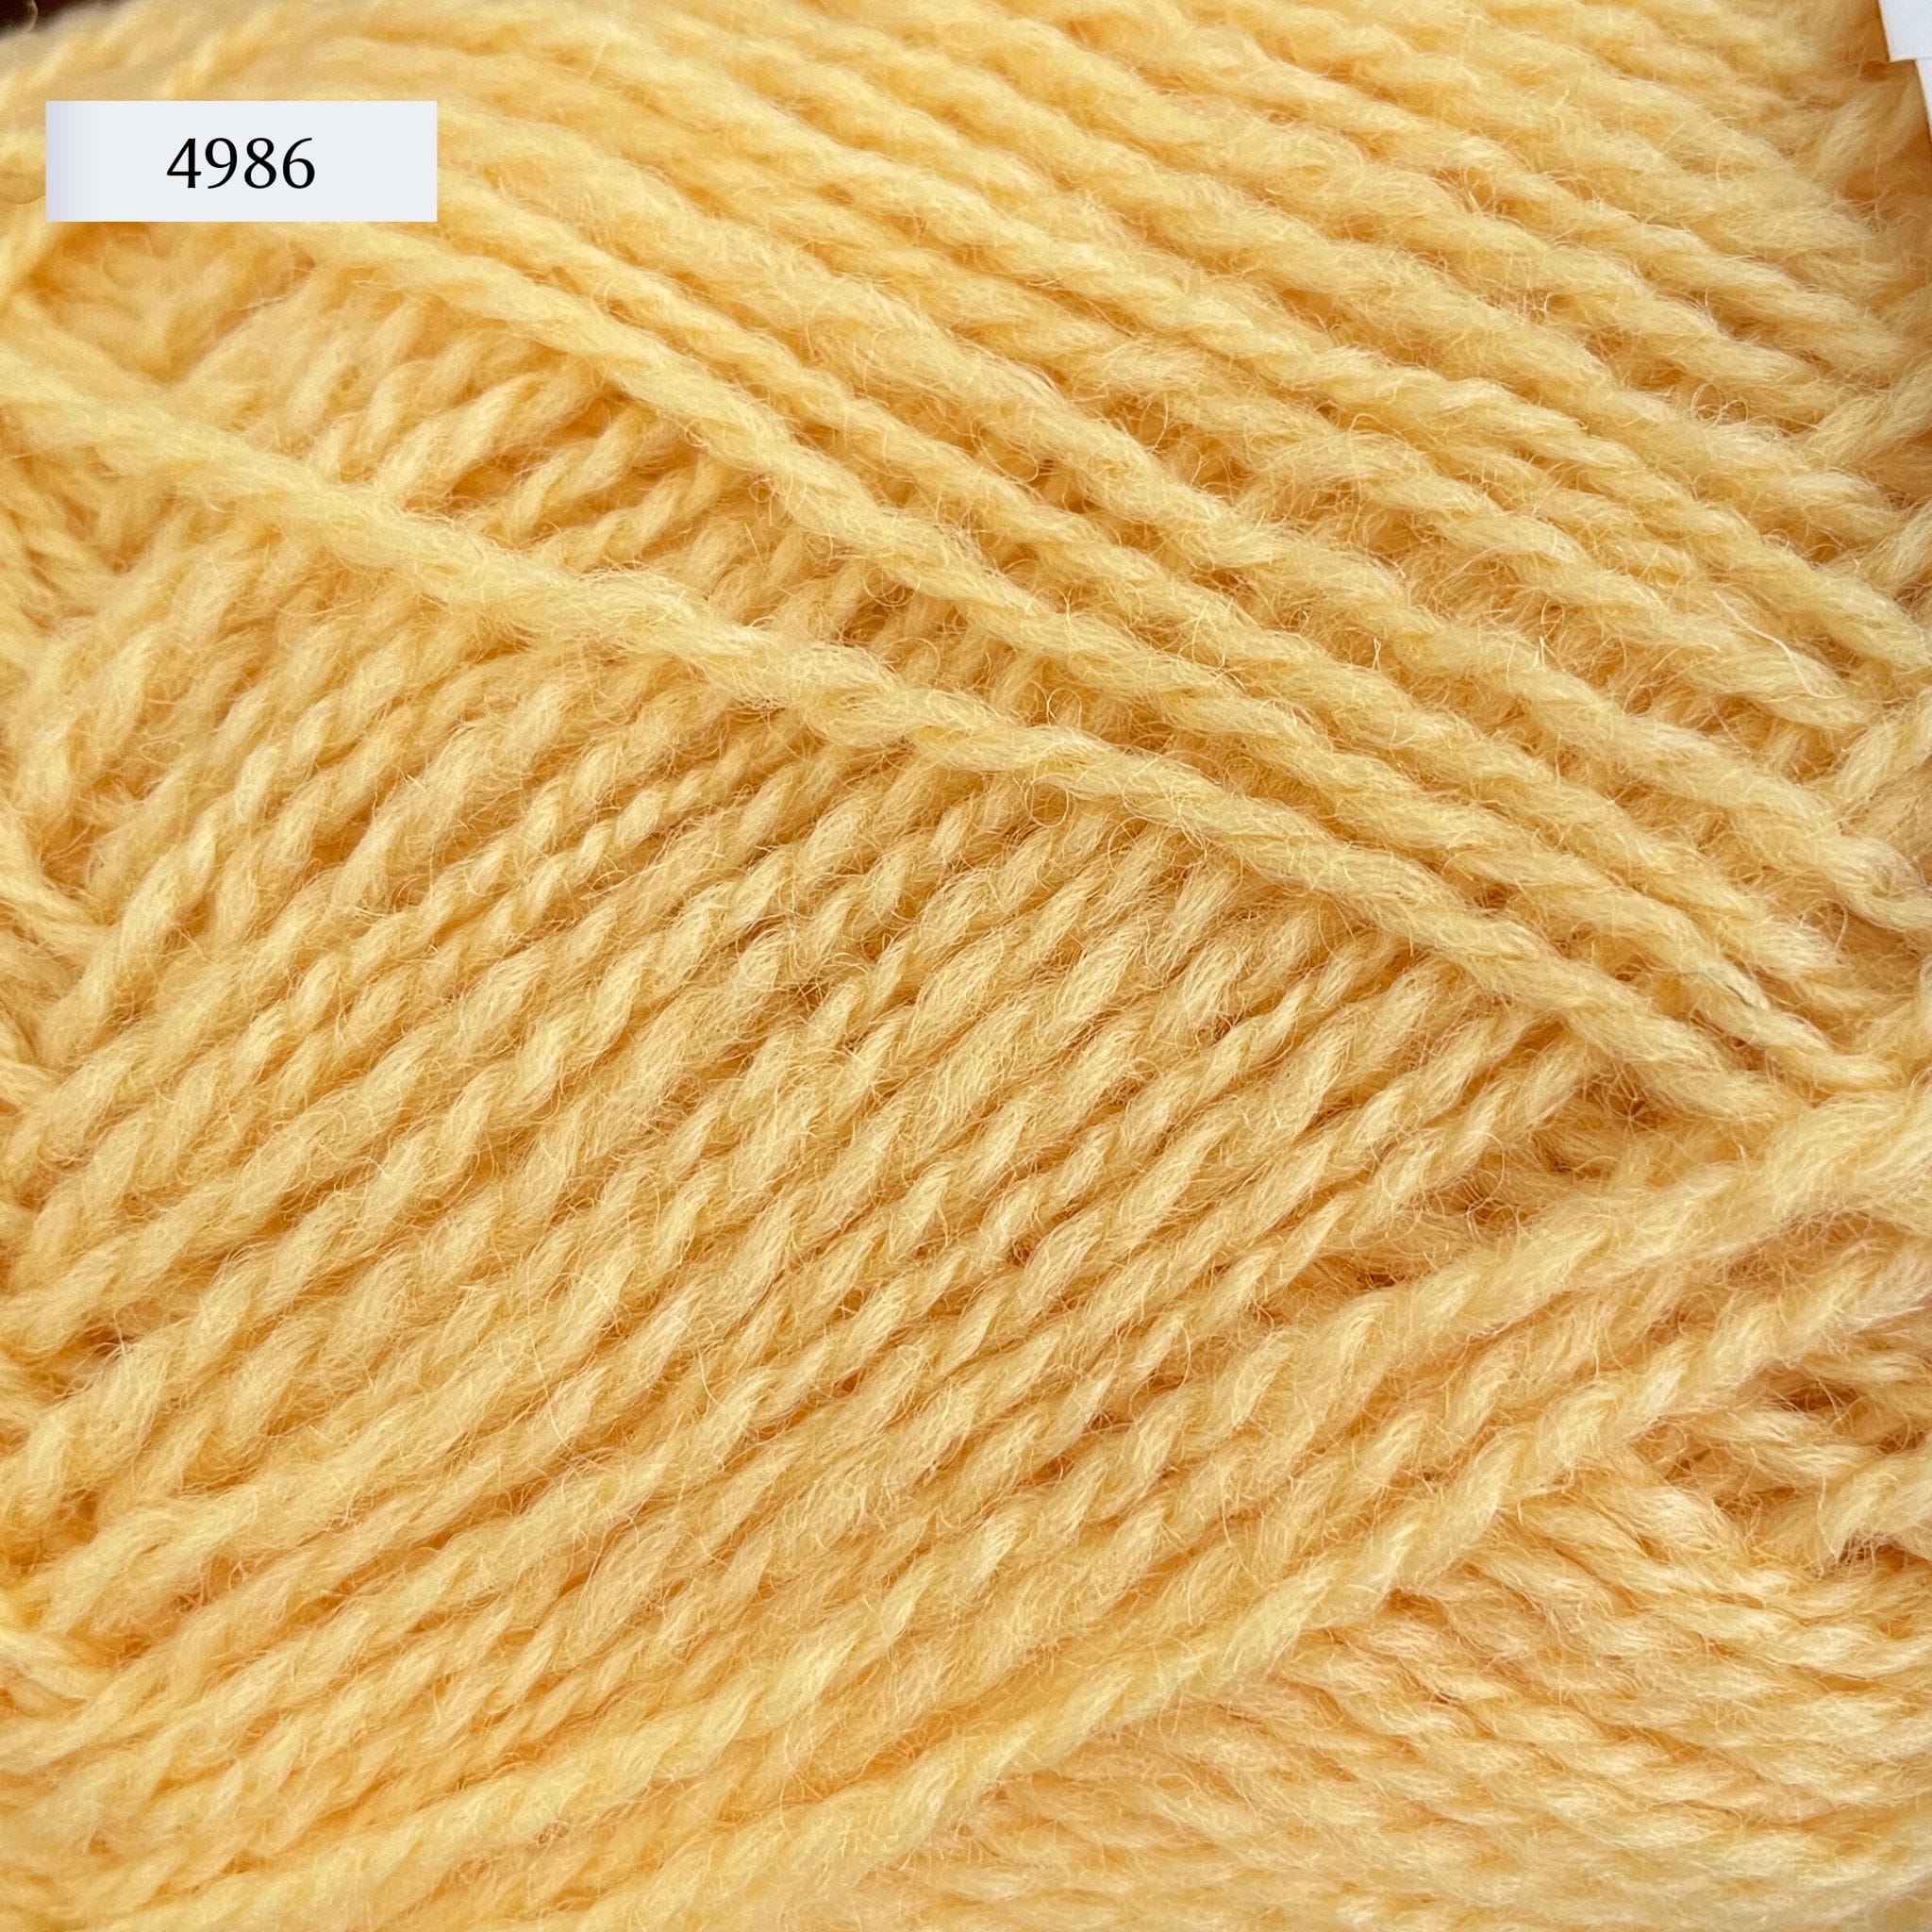 Rauma Finullgarn, a fingering/sport weight yarn, in color 4986, a light butter yellow